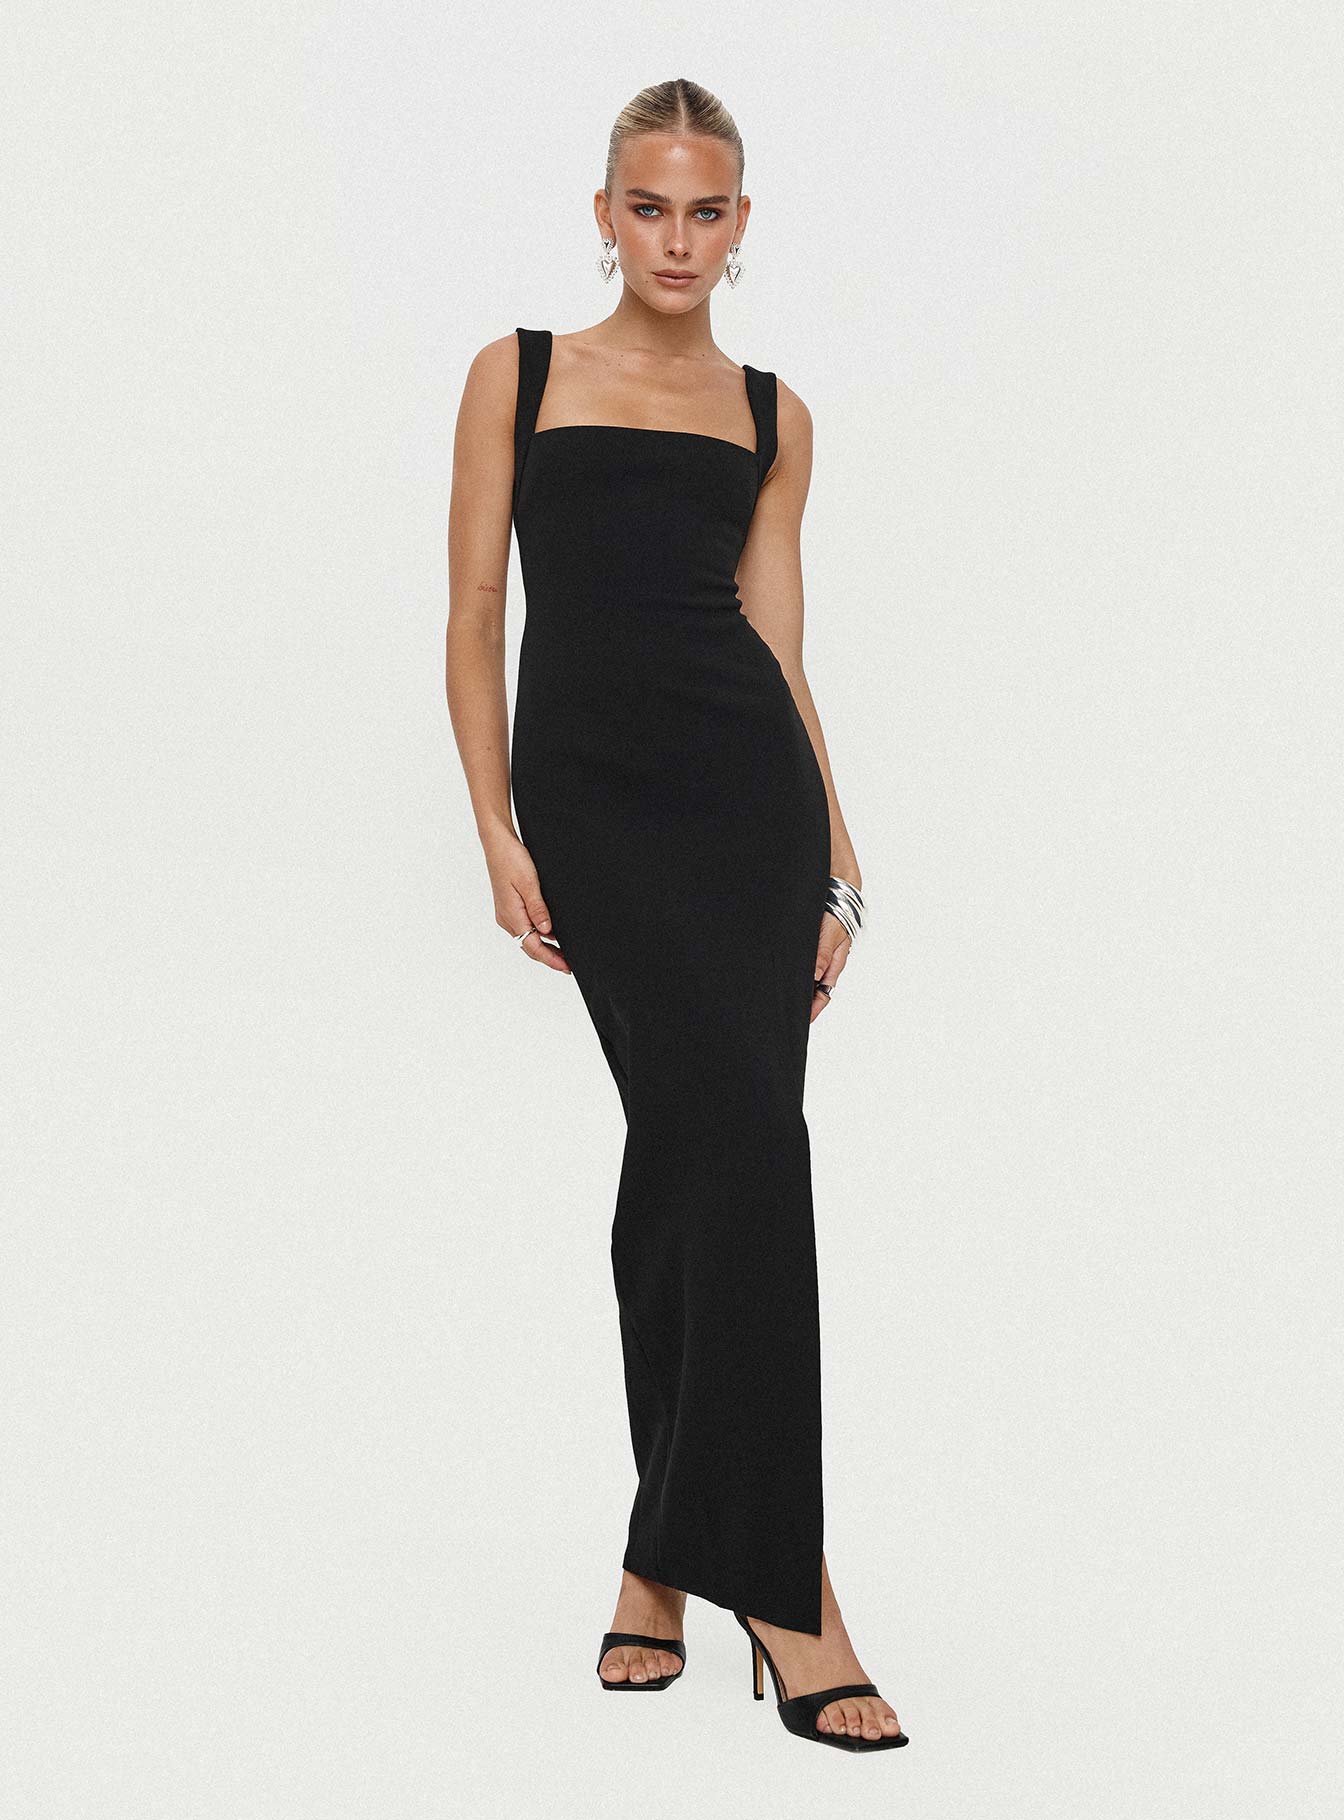 Shop Formal Dress - Bombshell Maxi Dress Black third image